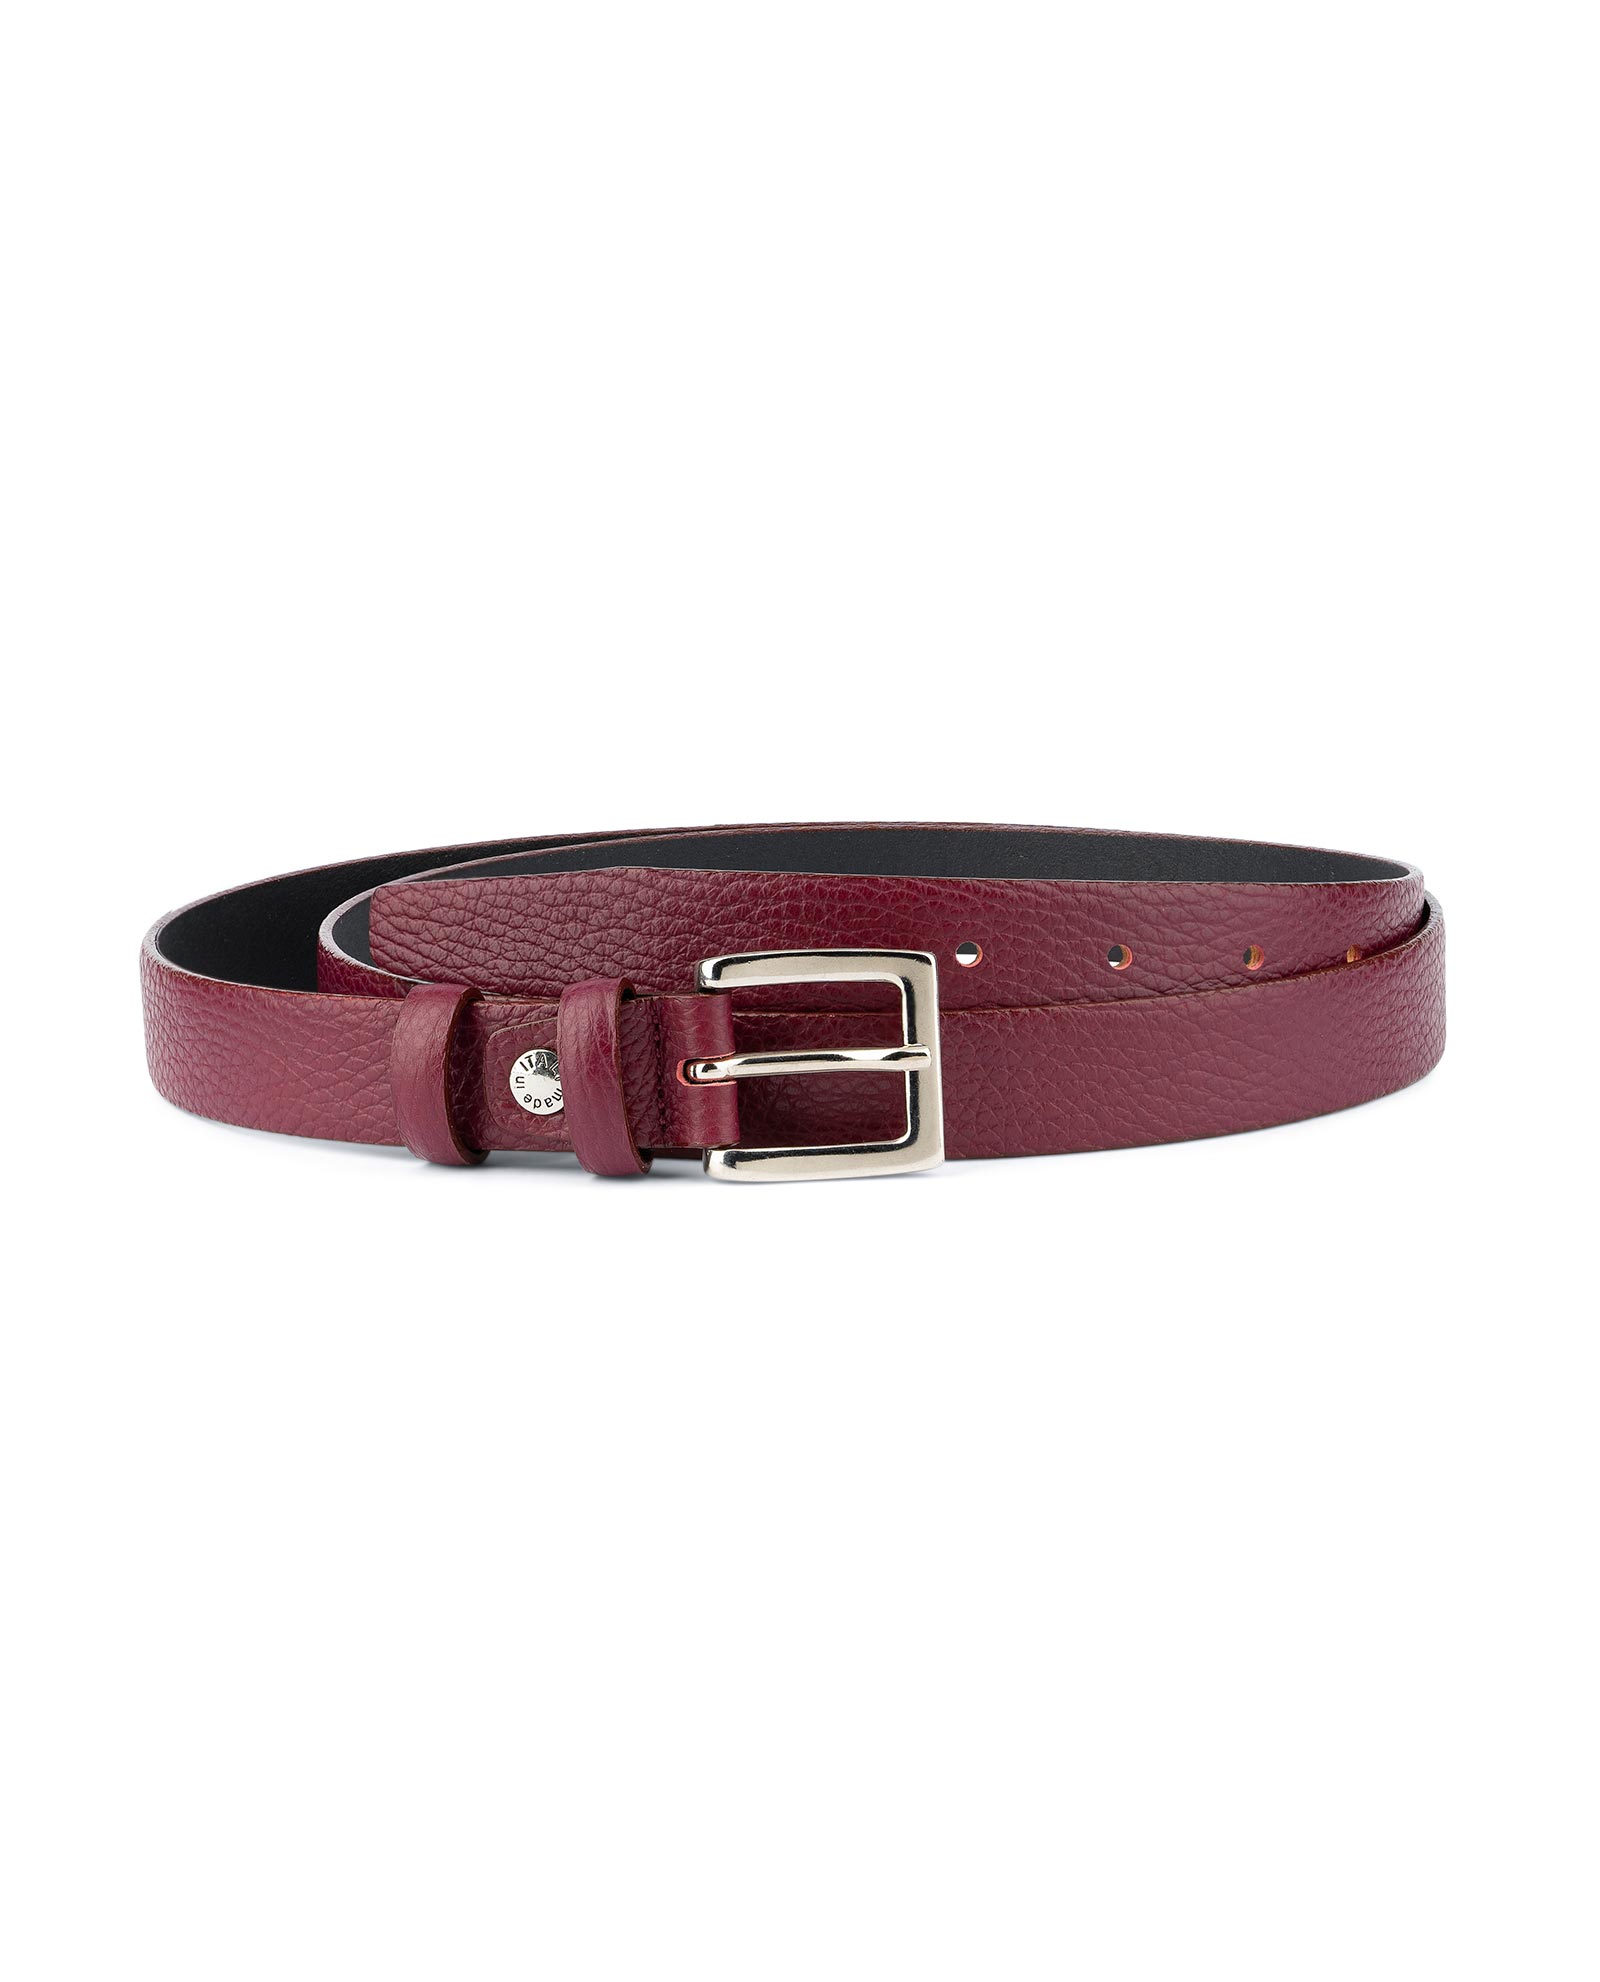 Red Full Grain Leather Trouser Belt Burgundy Classic Belt 1 1/4" Wide Accessories Belts & Braces Belts Womens Leather Belt 32mm Mens Leather Belt 